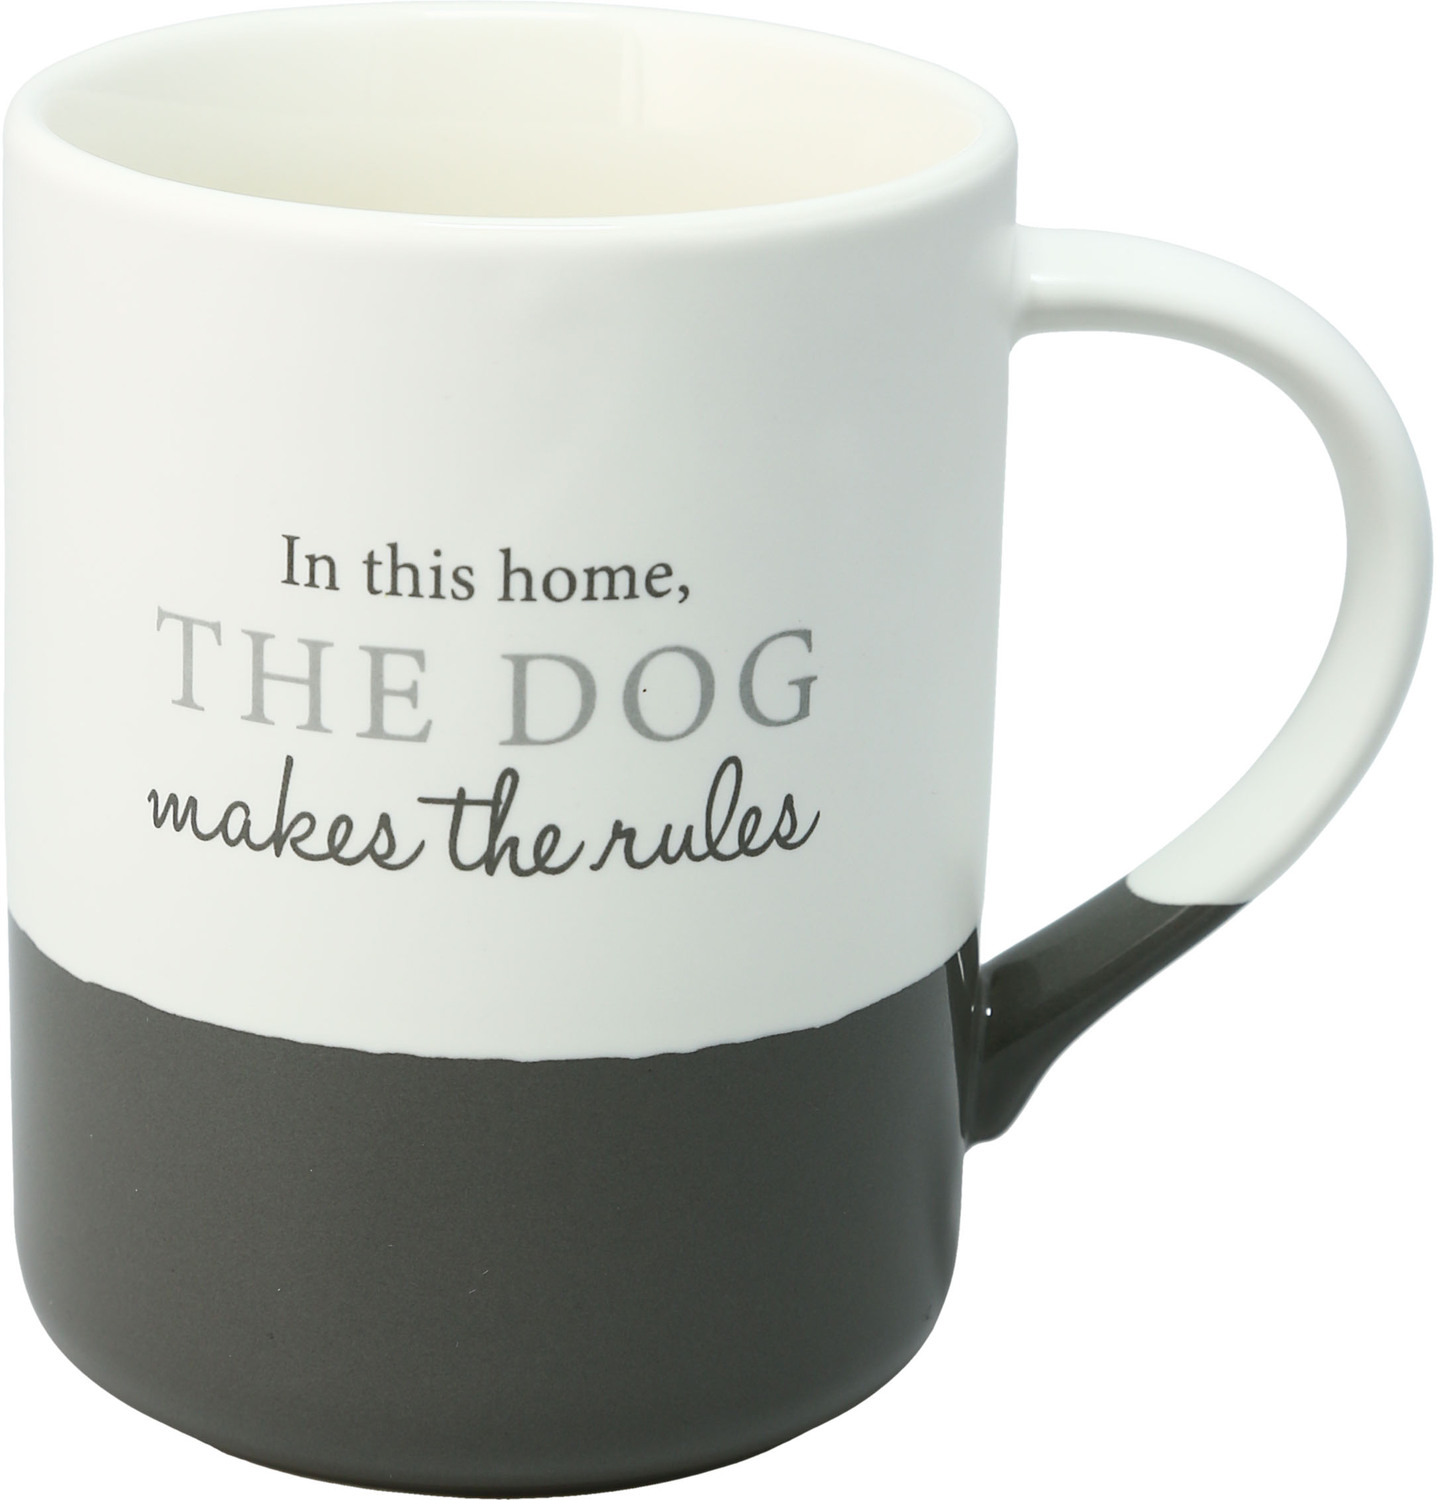 The Dog by A-Parent-ly - The Dog - 18 oz Mug